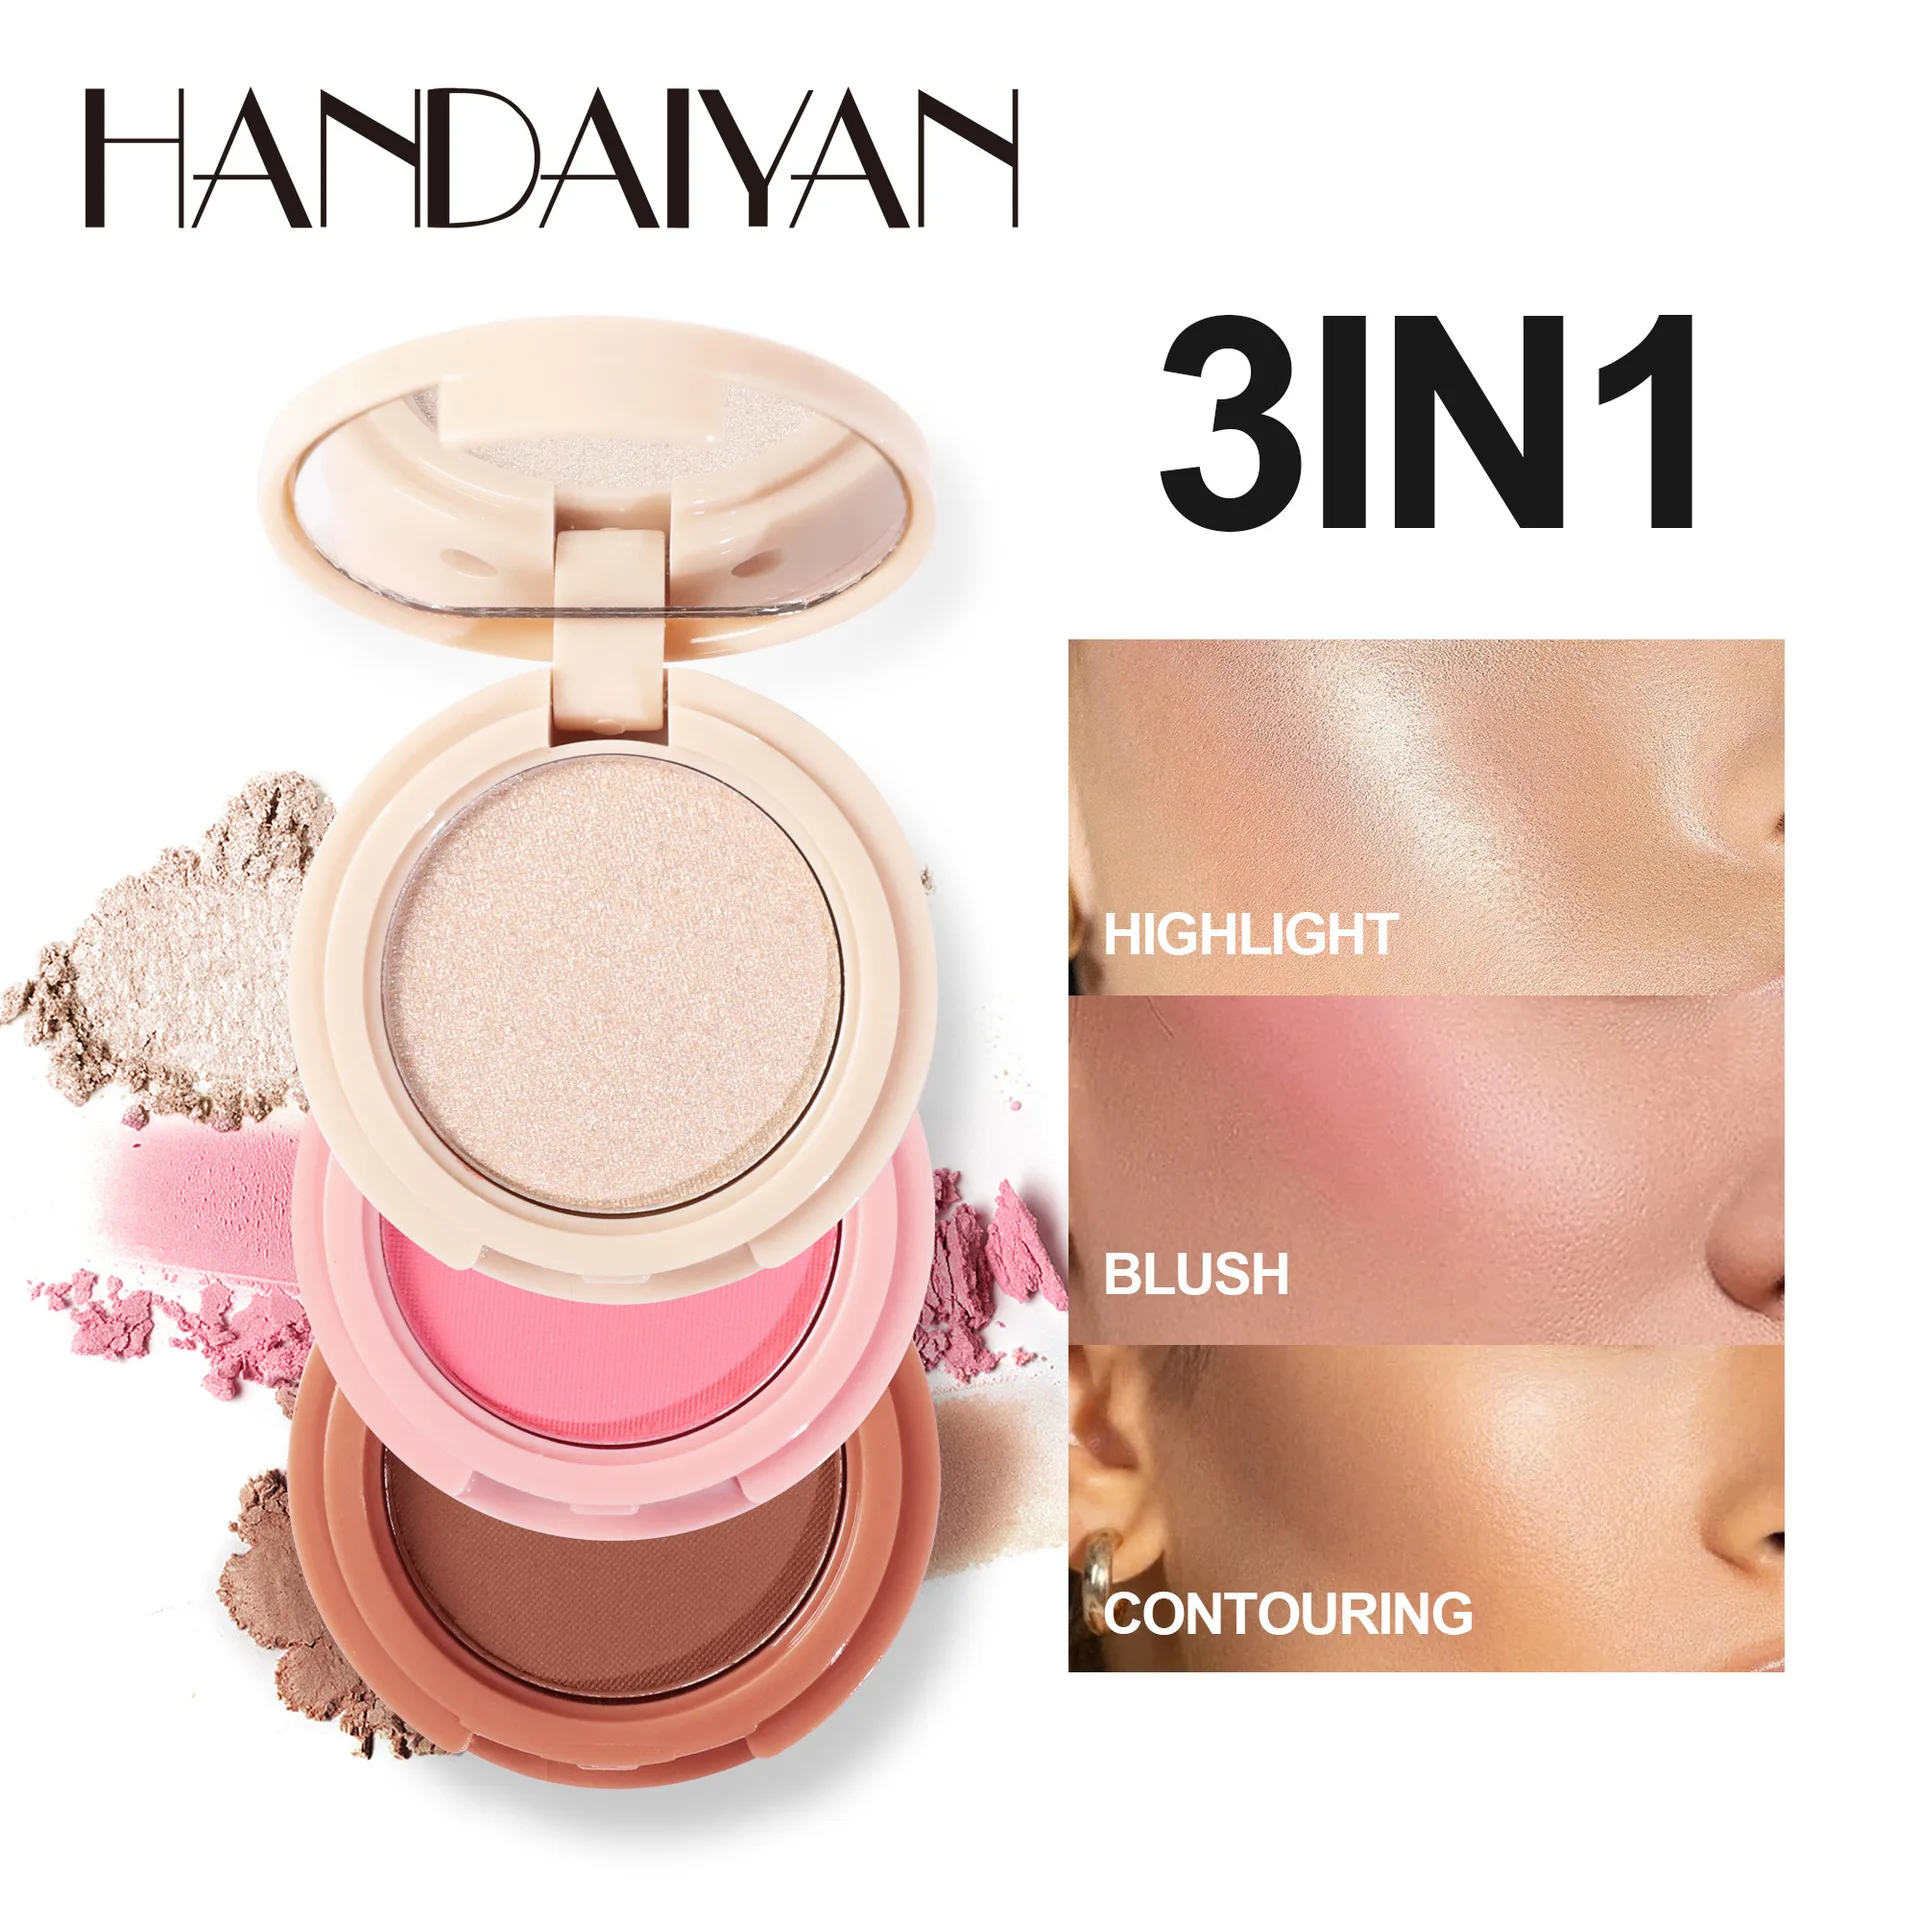 

HANDAIYAN Multifunction Blush Highlight Contour Powder Waterproof Lasting Shimmer Eye Shadow 3 In 1 New Fashion Makeup Plate 6g